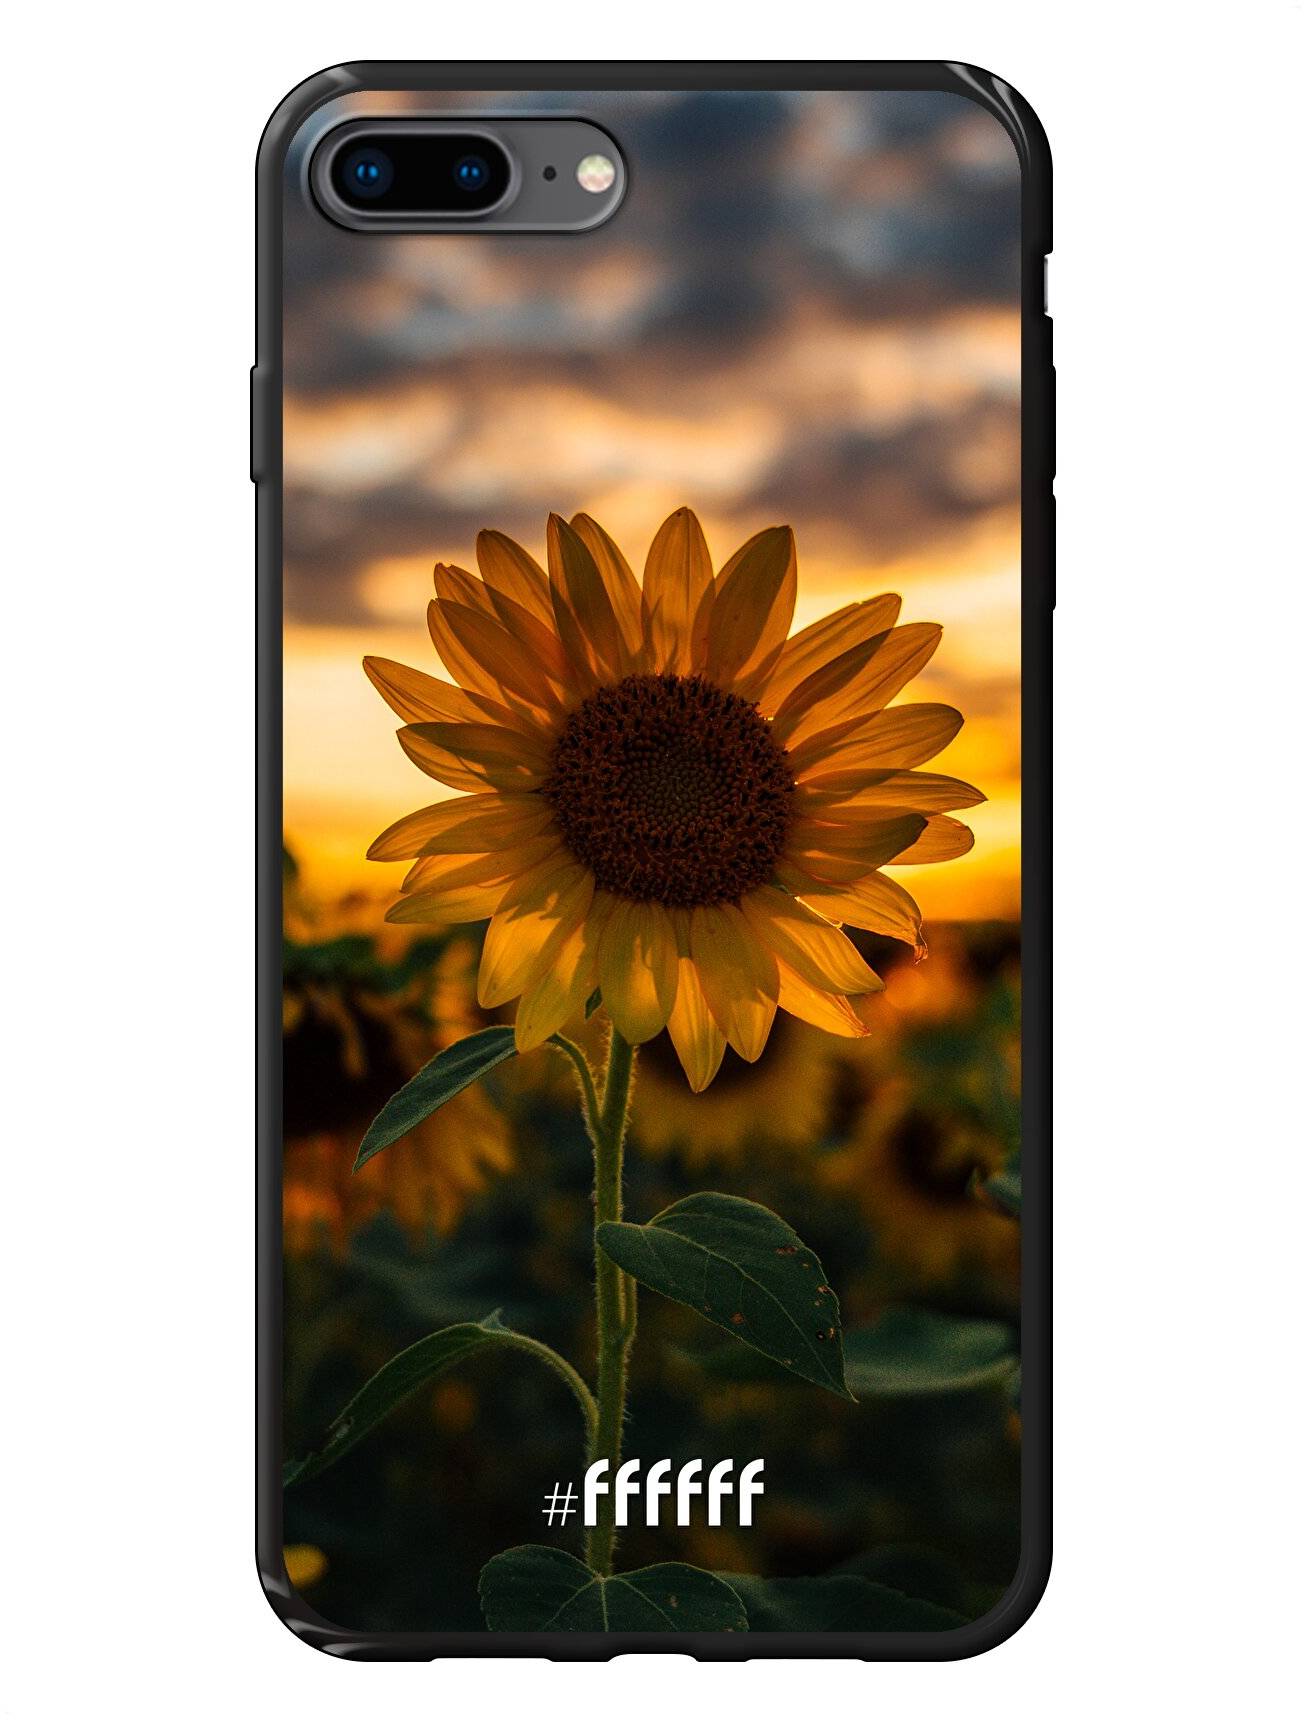 Sunset Sunflower iPhone 7 Plus